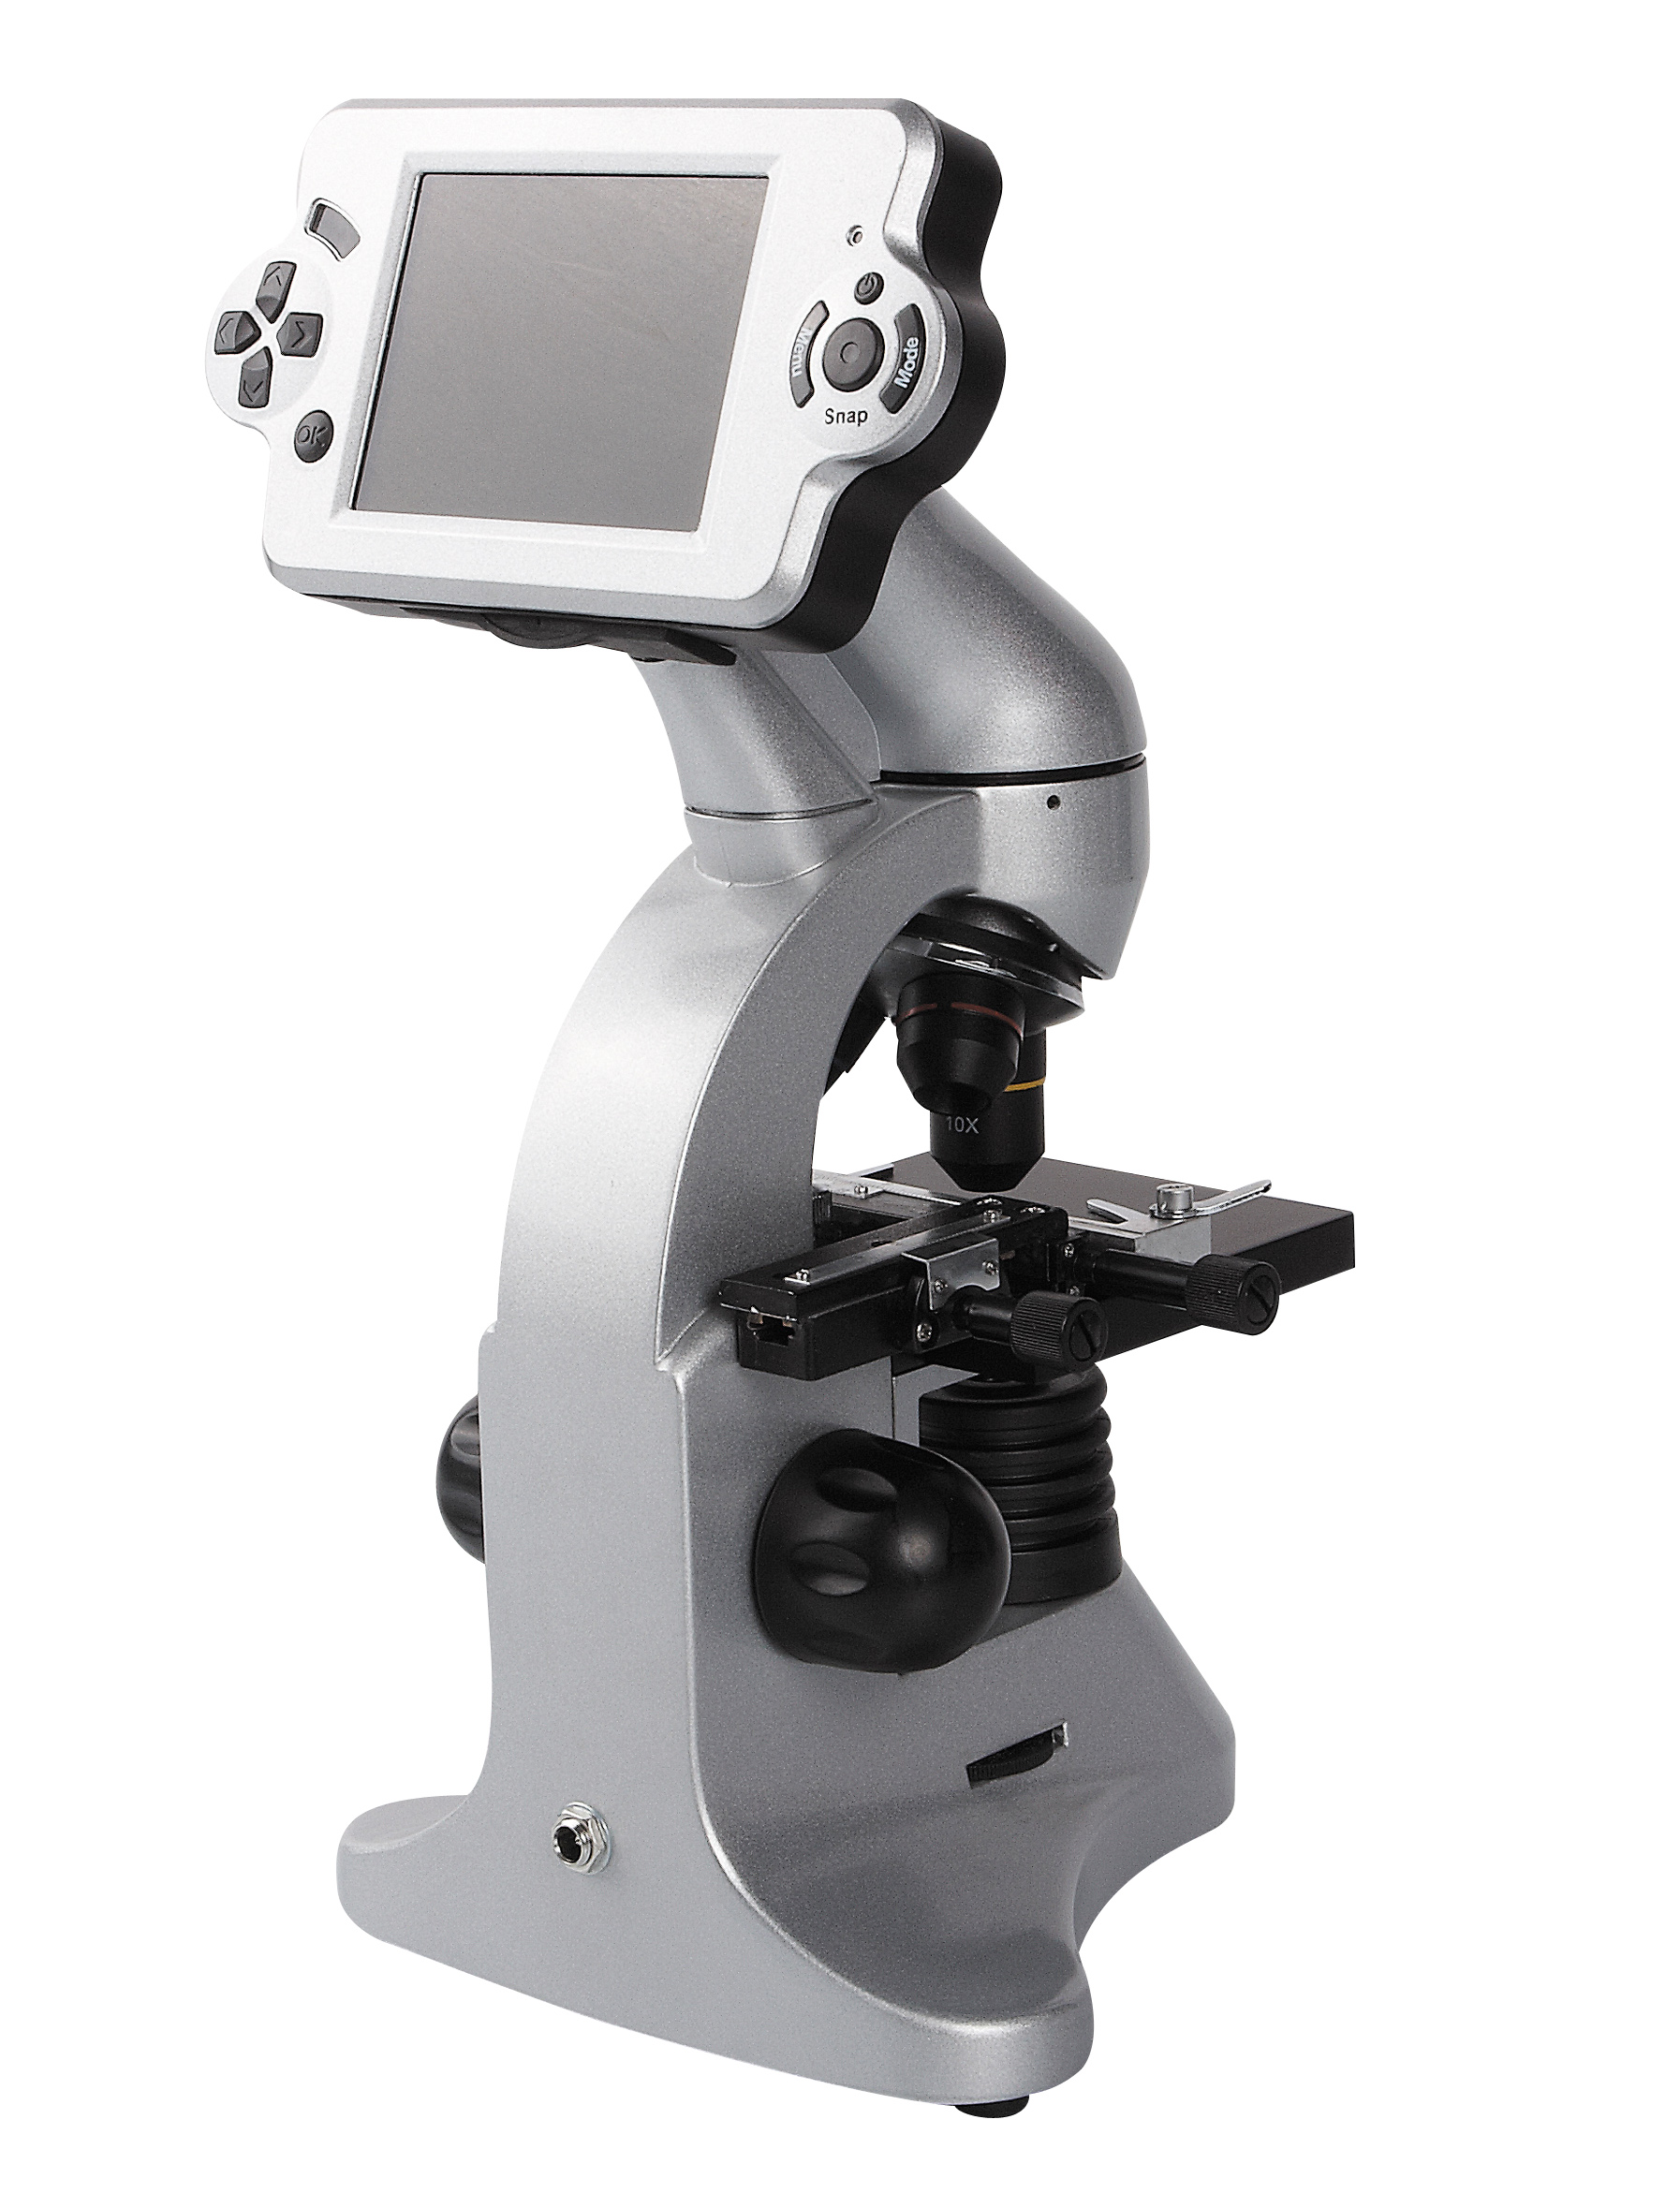 BLM-212 - Portable Digital LCD Biological Microscope